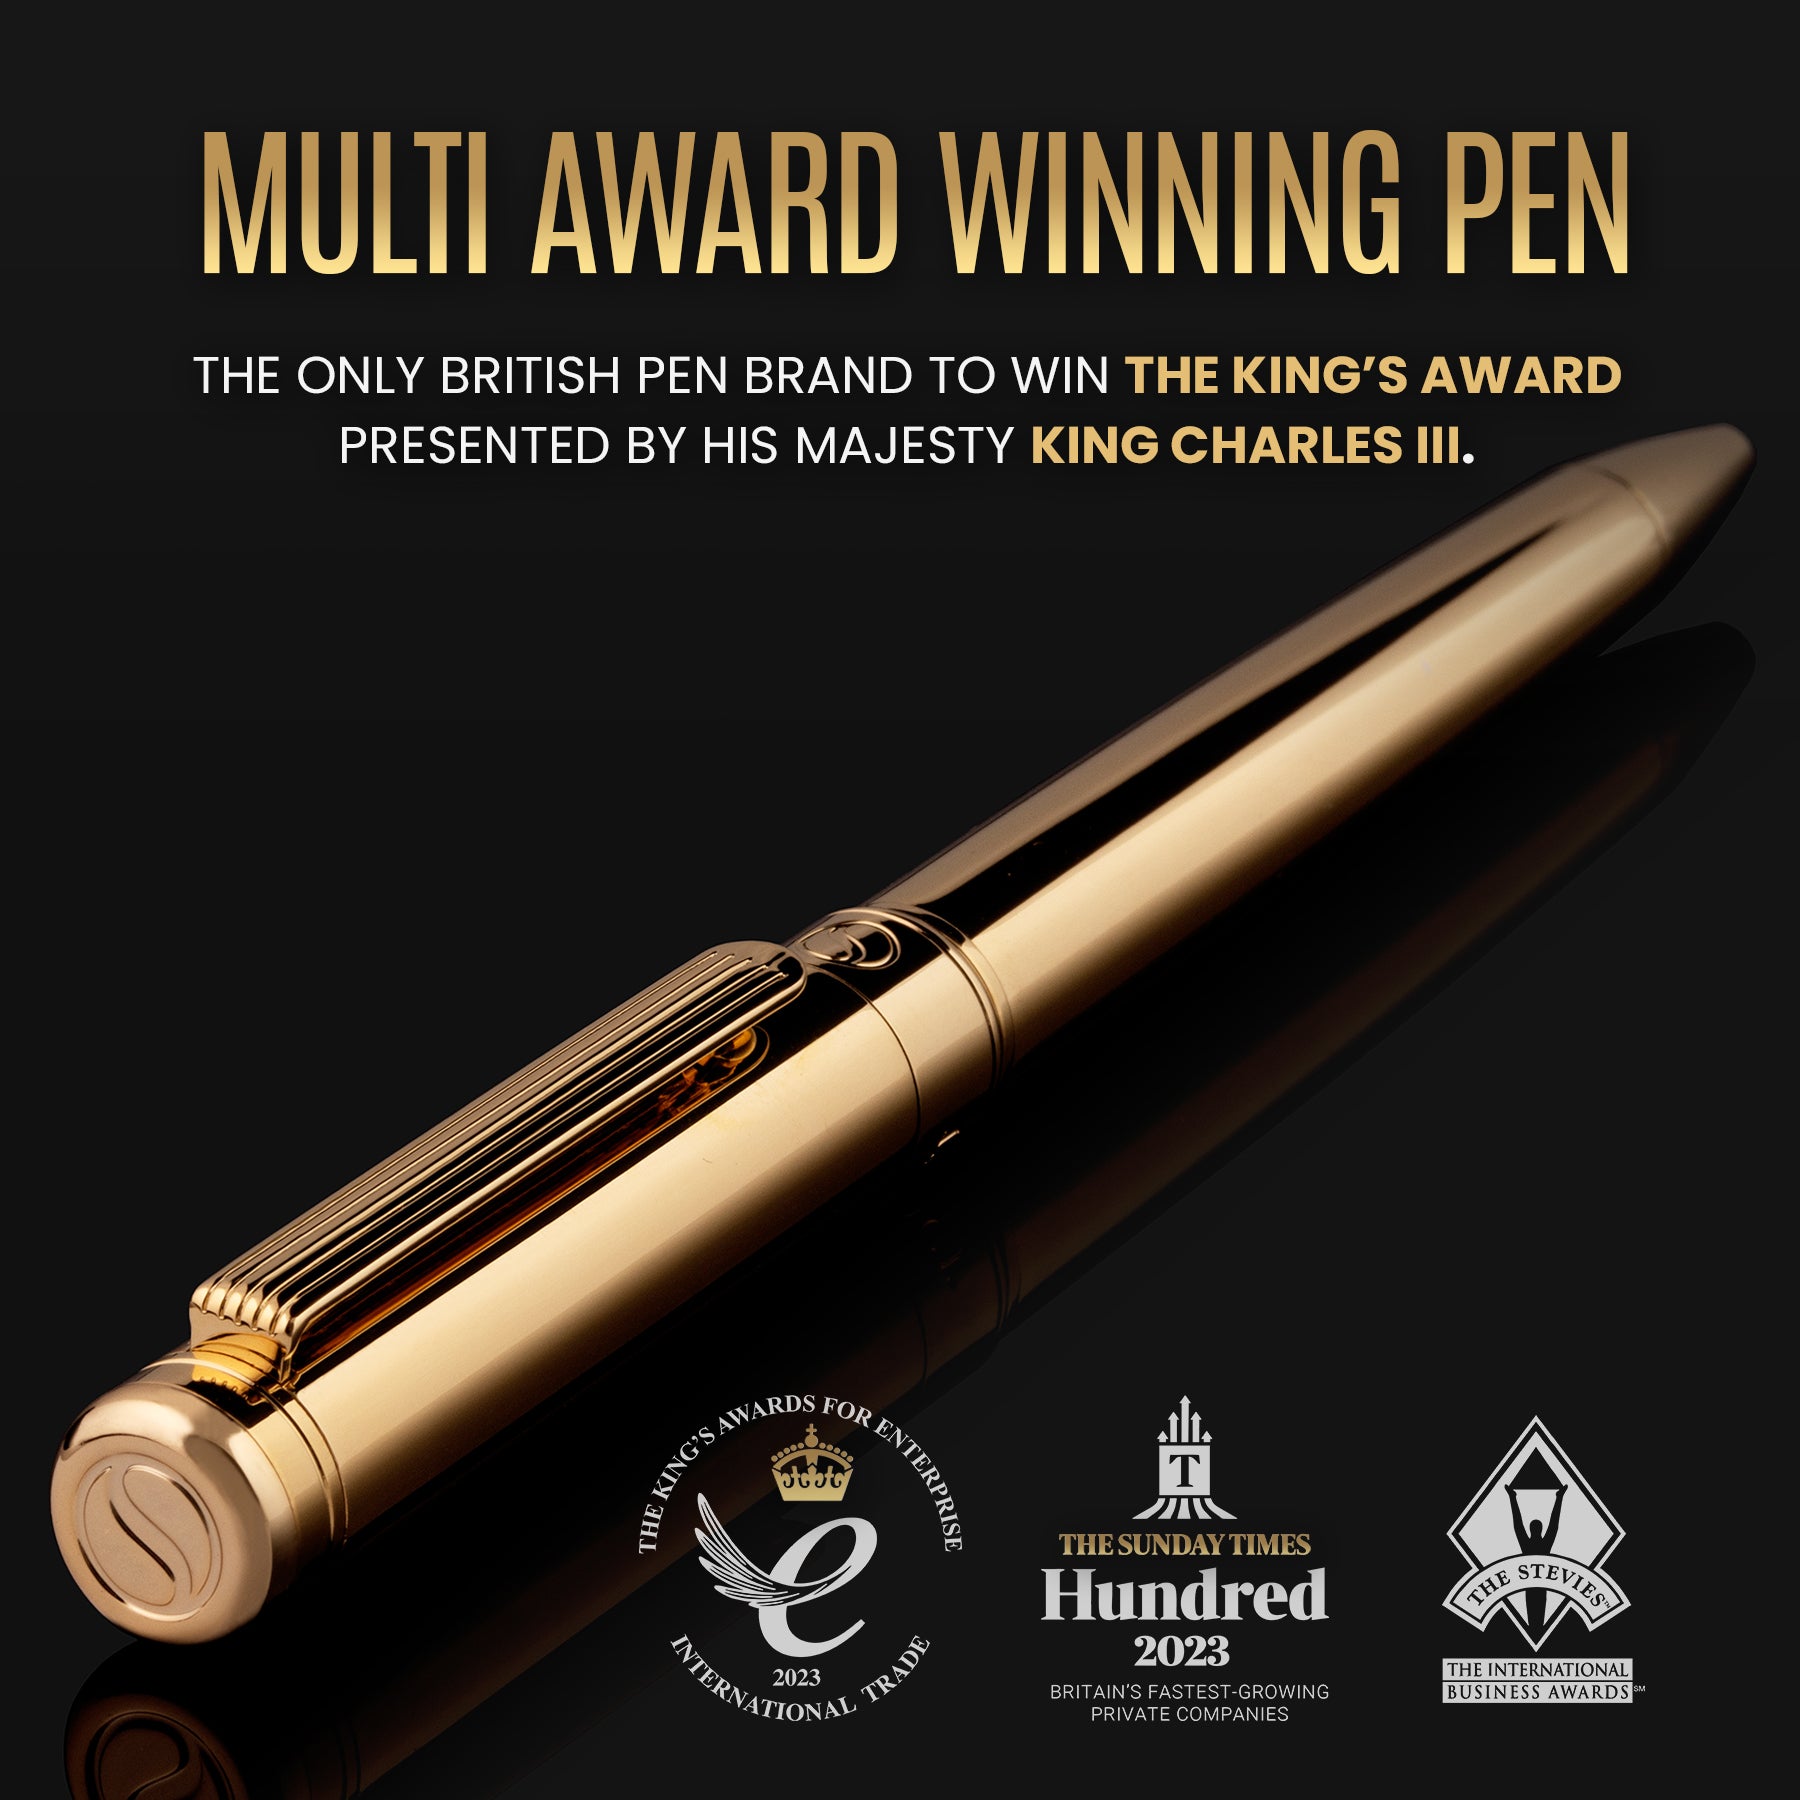 Scriveiner Classic Gold ballpoint Pen